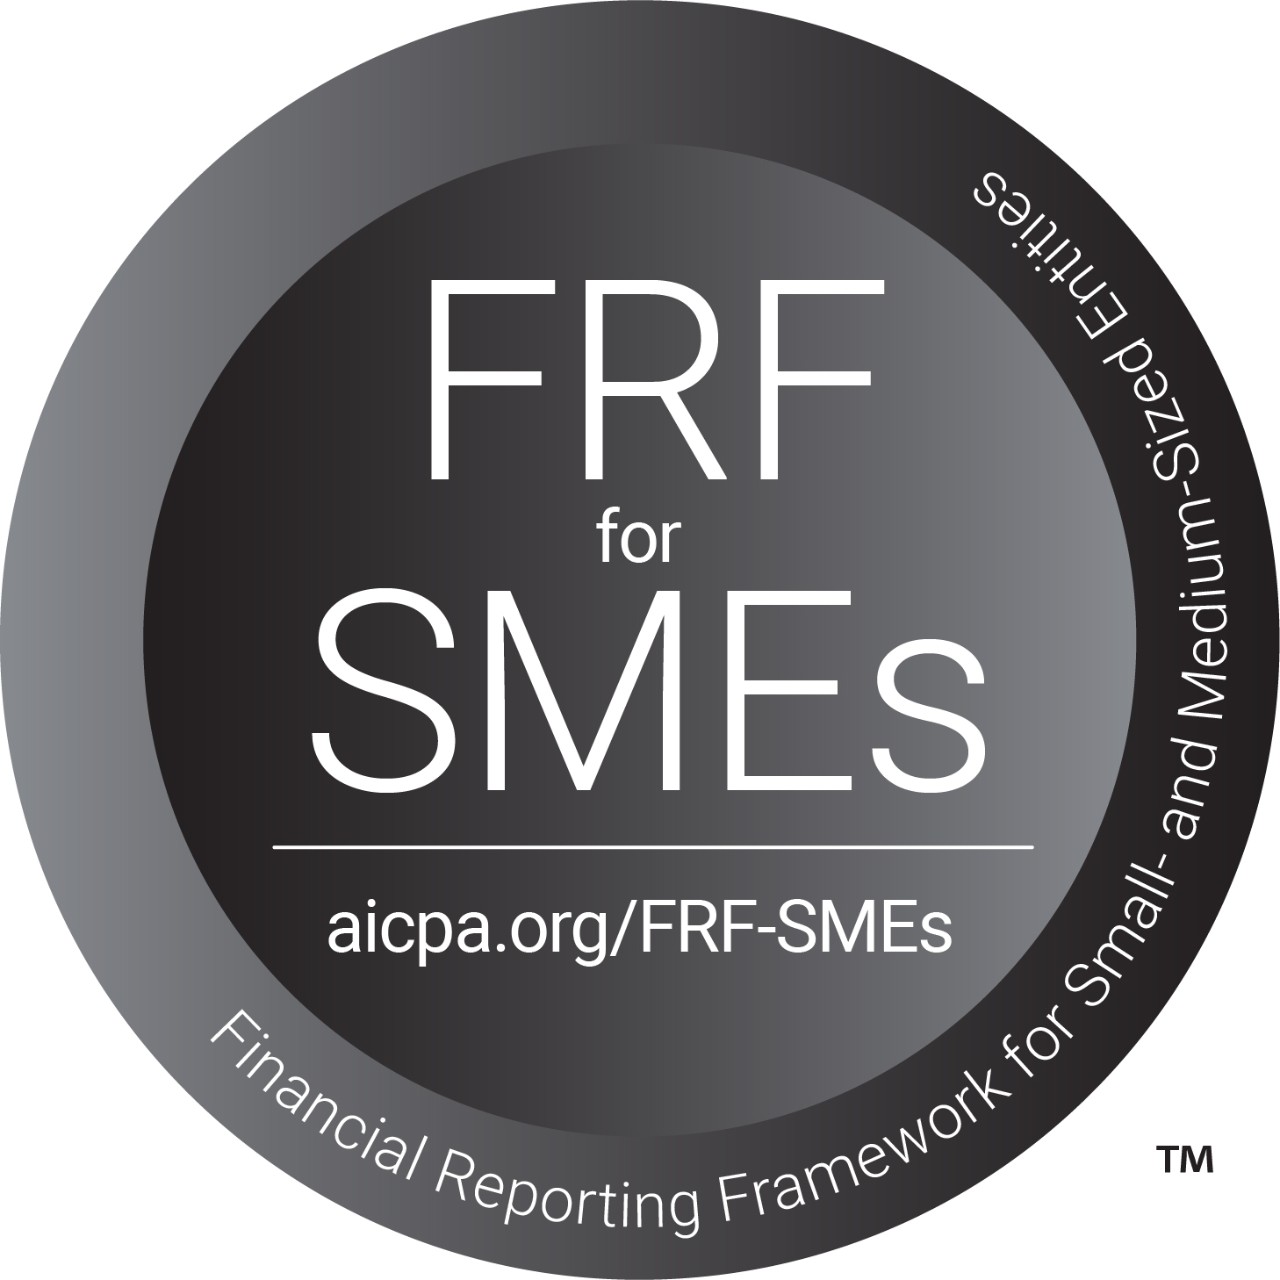 FRF for SMEs logo black